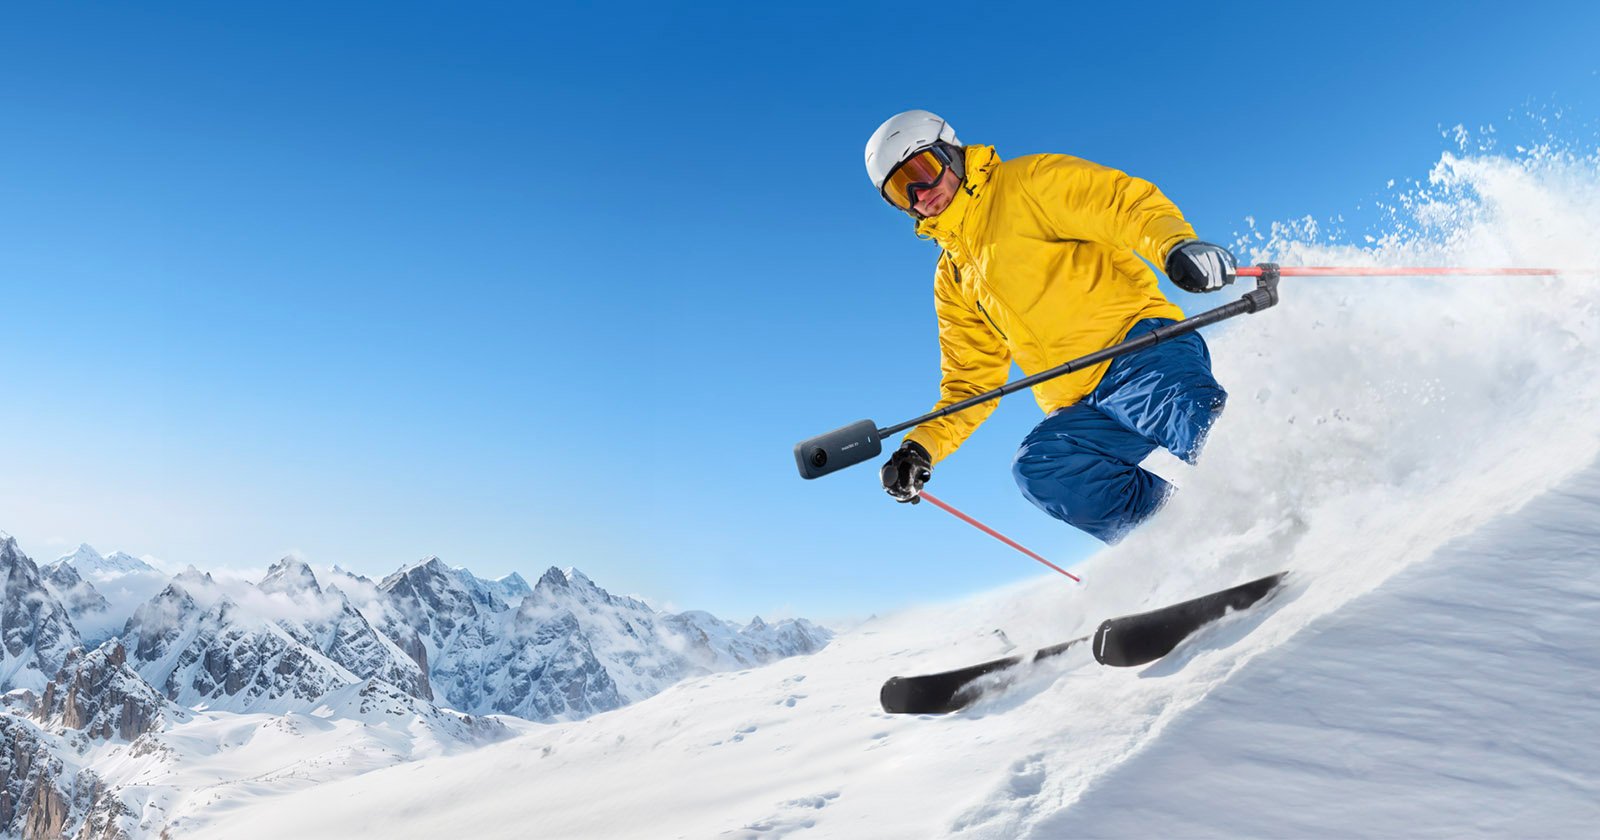 The Insta360 Ski Pole Mount Makes Epic Videos on the Slopes Easier